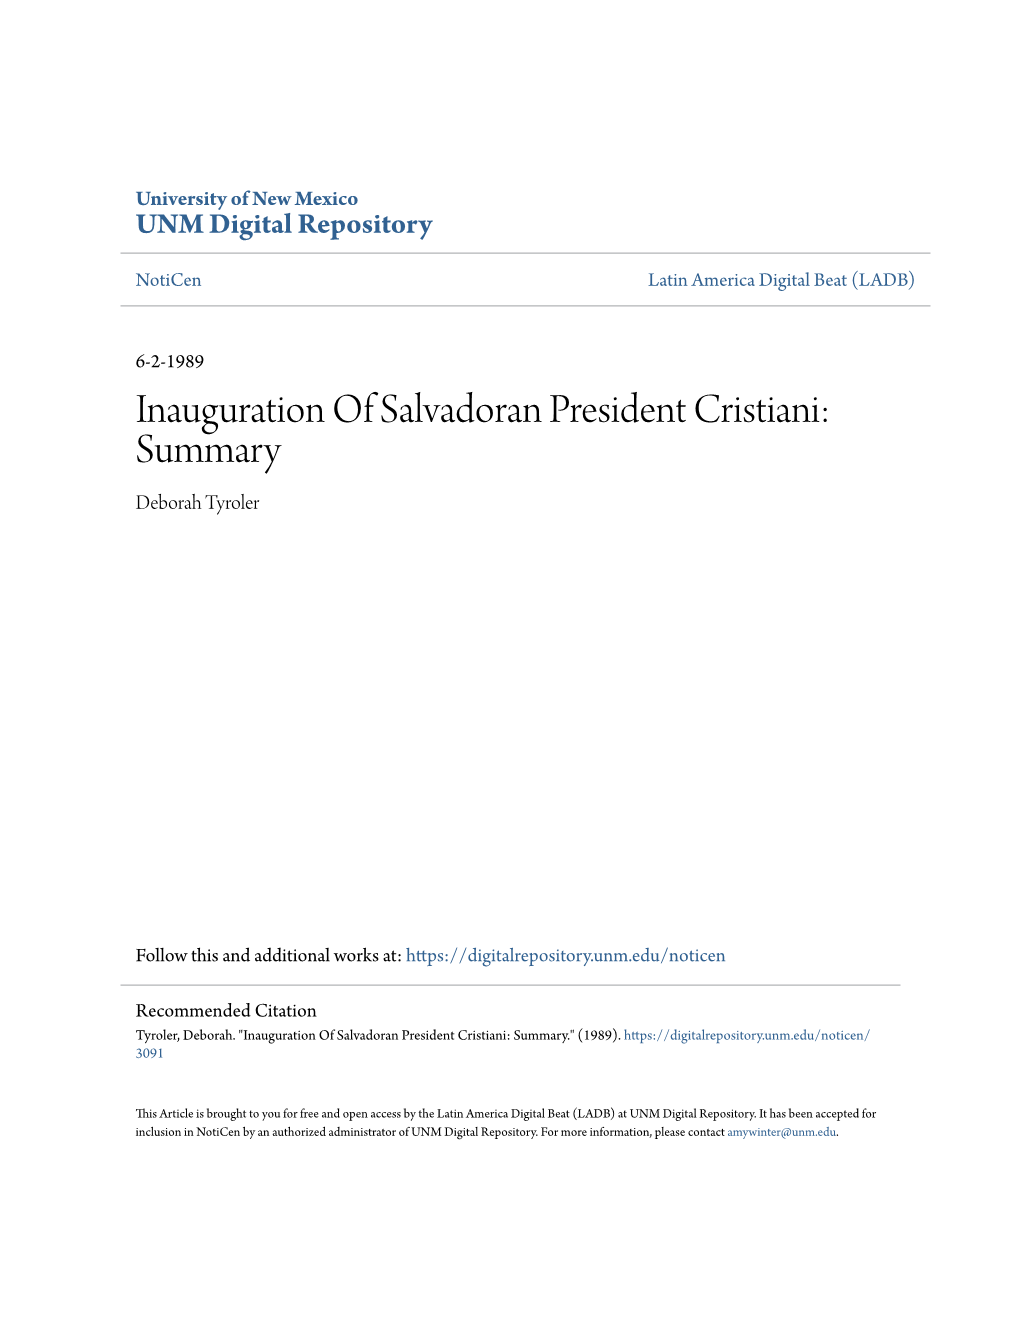 Inauguration of Salvadoran President Cristiani: Summary Deborah Tyroler